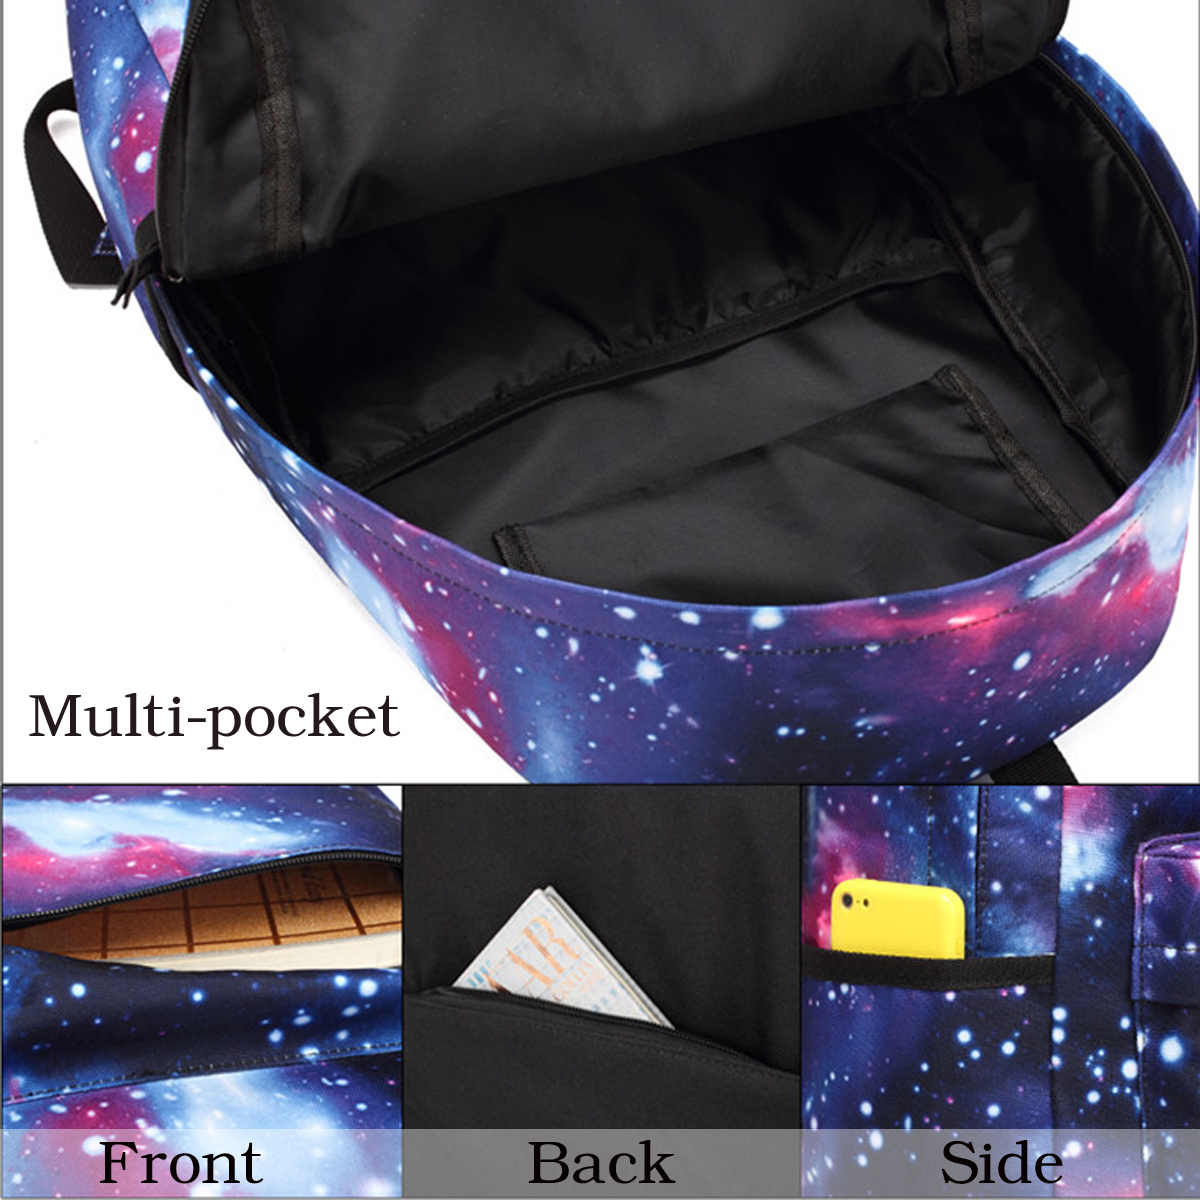 Outdoor-Night-Luminous-Backpack-USB-Oxford-School-Bag-Shoulder-Bag-Waterproof-Handbag-1373775-5